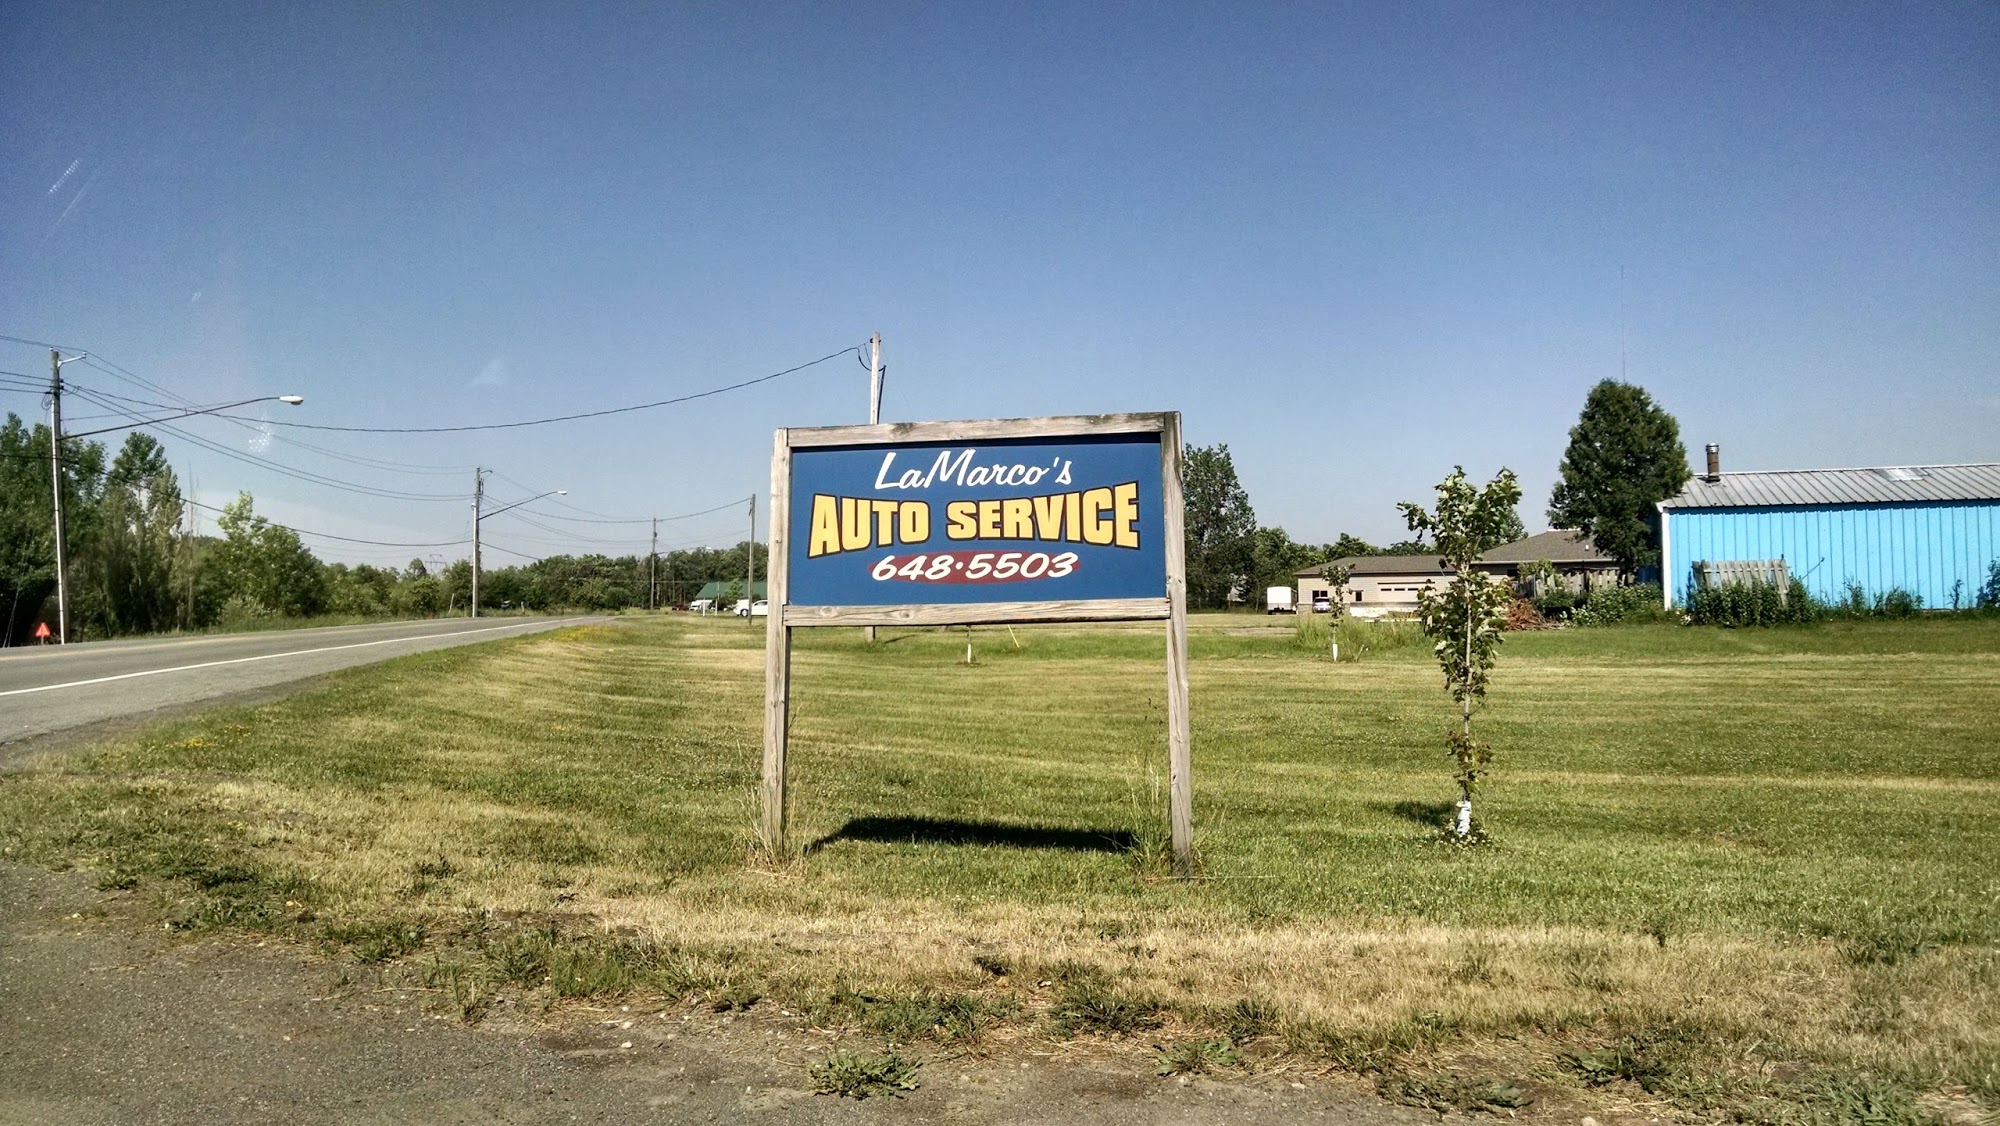 LaMarco's Auto Service